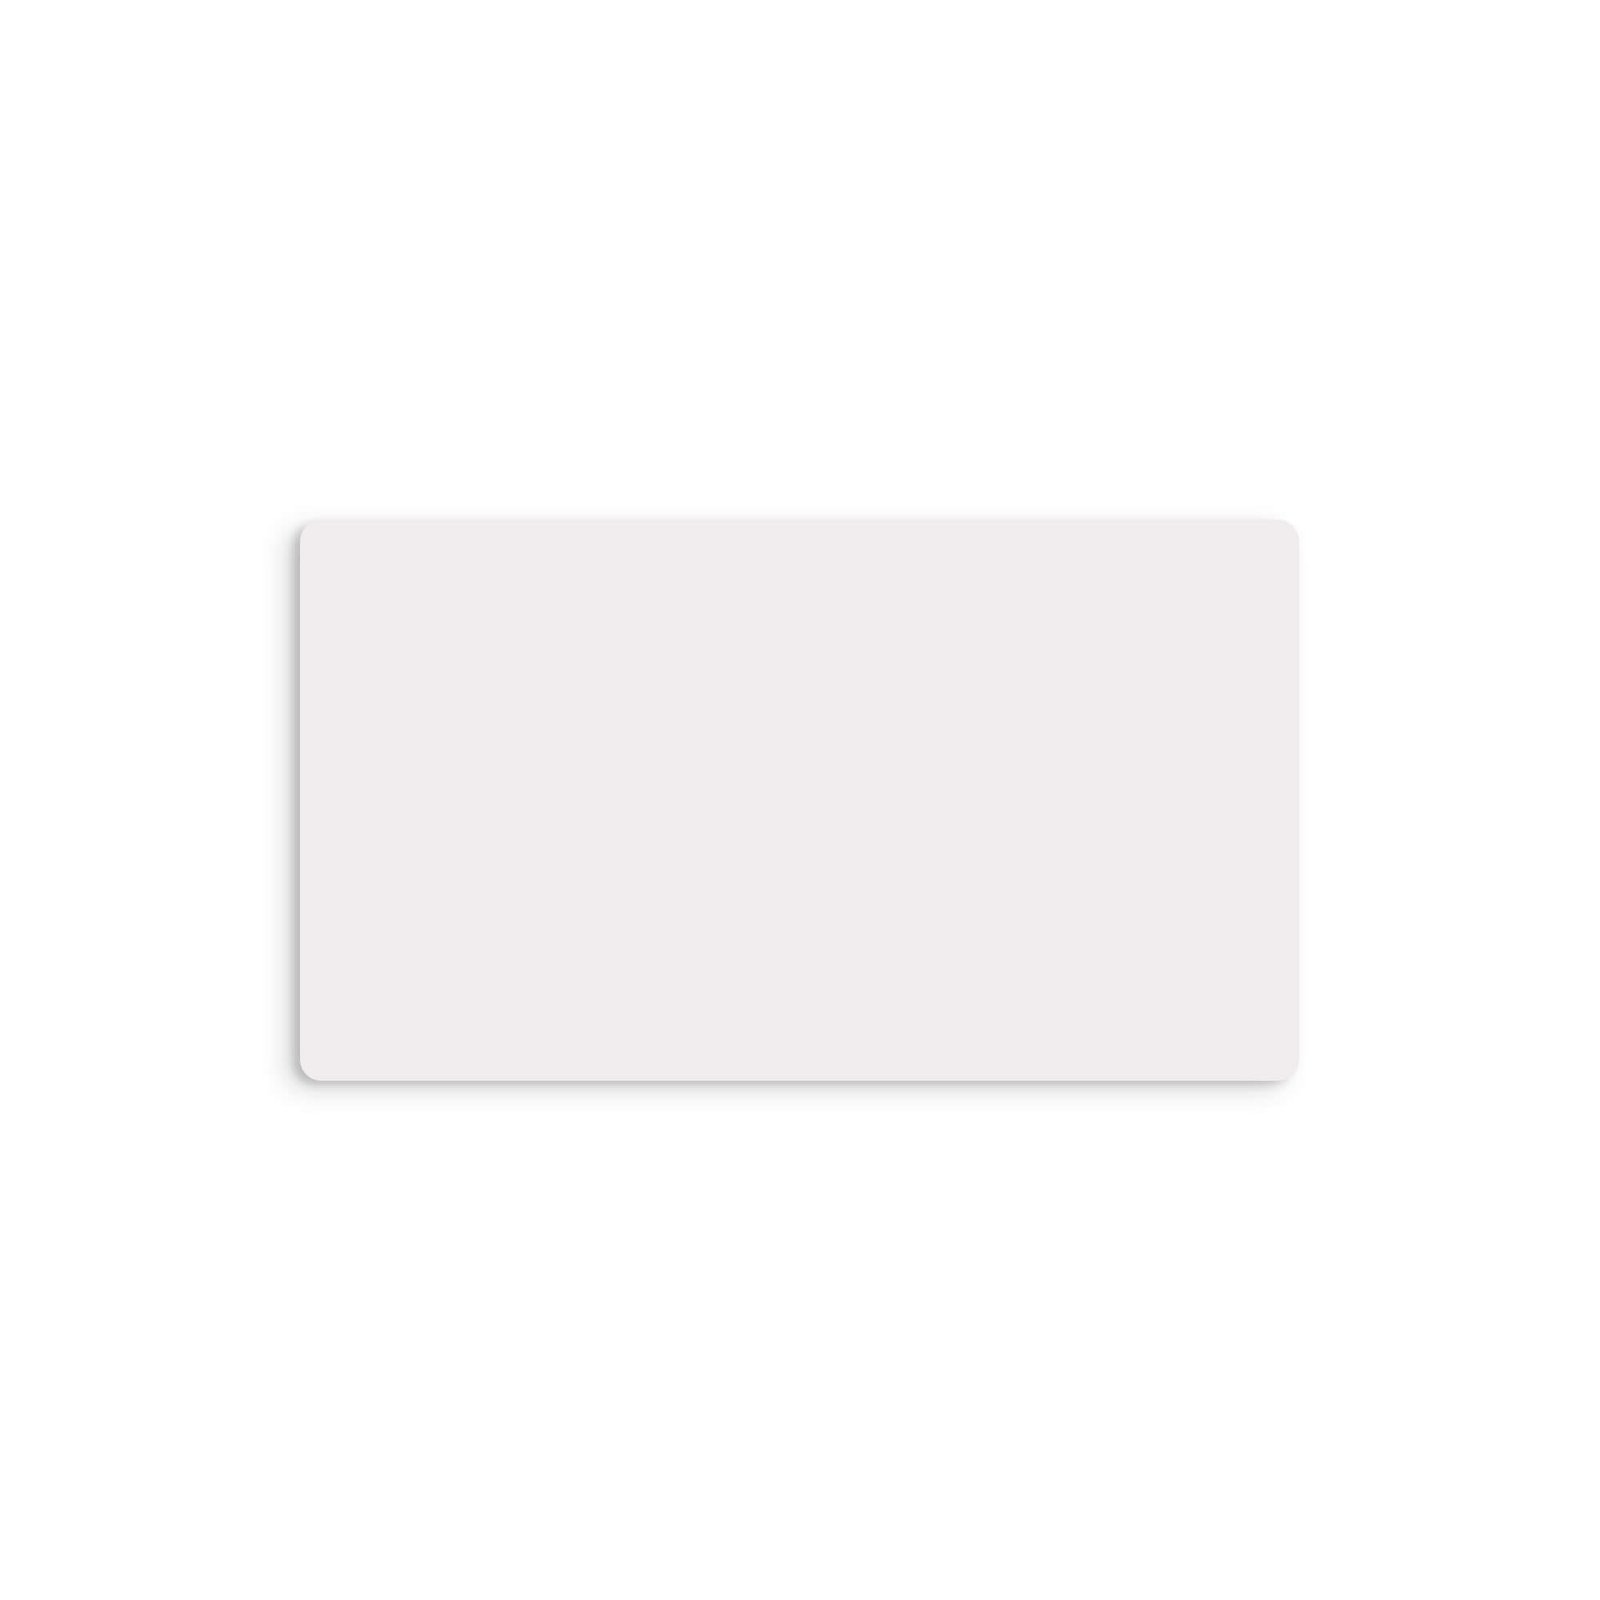 Blank Free Plastic Card Mockup PSD Template (1)